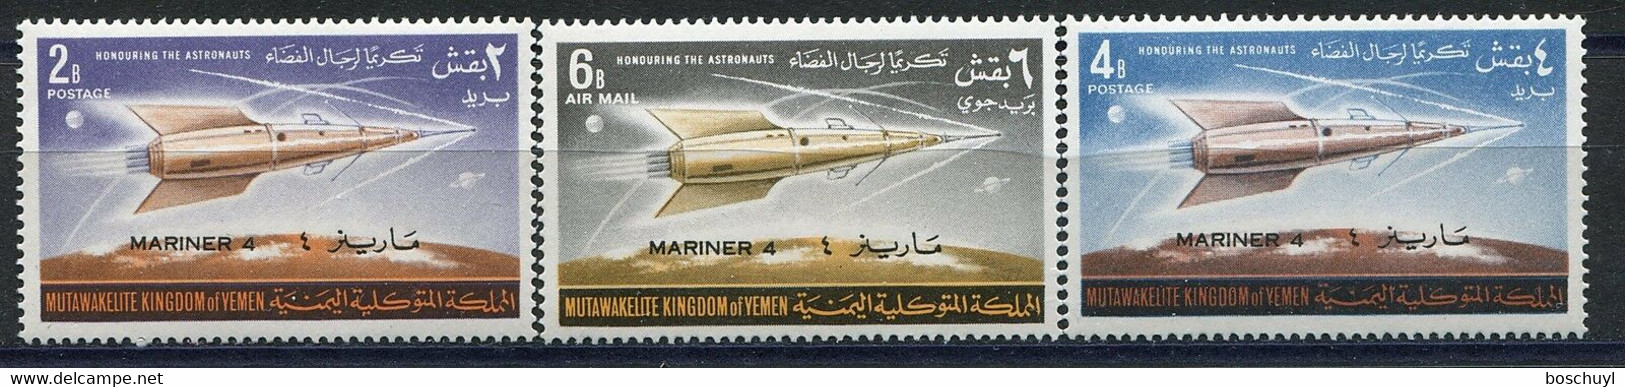 Yemen Kingdom, 1965, Space, Mars Probe, Mariner 4 Overprint, MNH Perforated, Michel 165-167A - Yemen